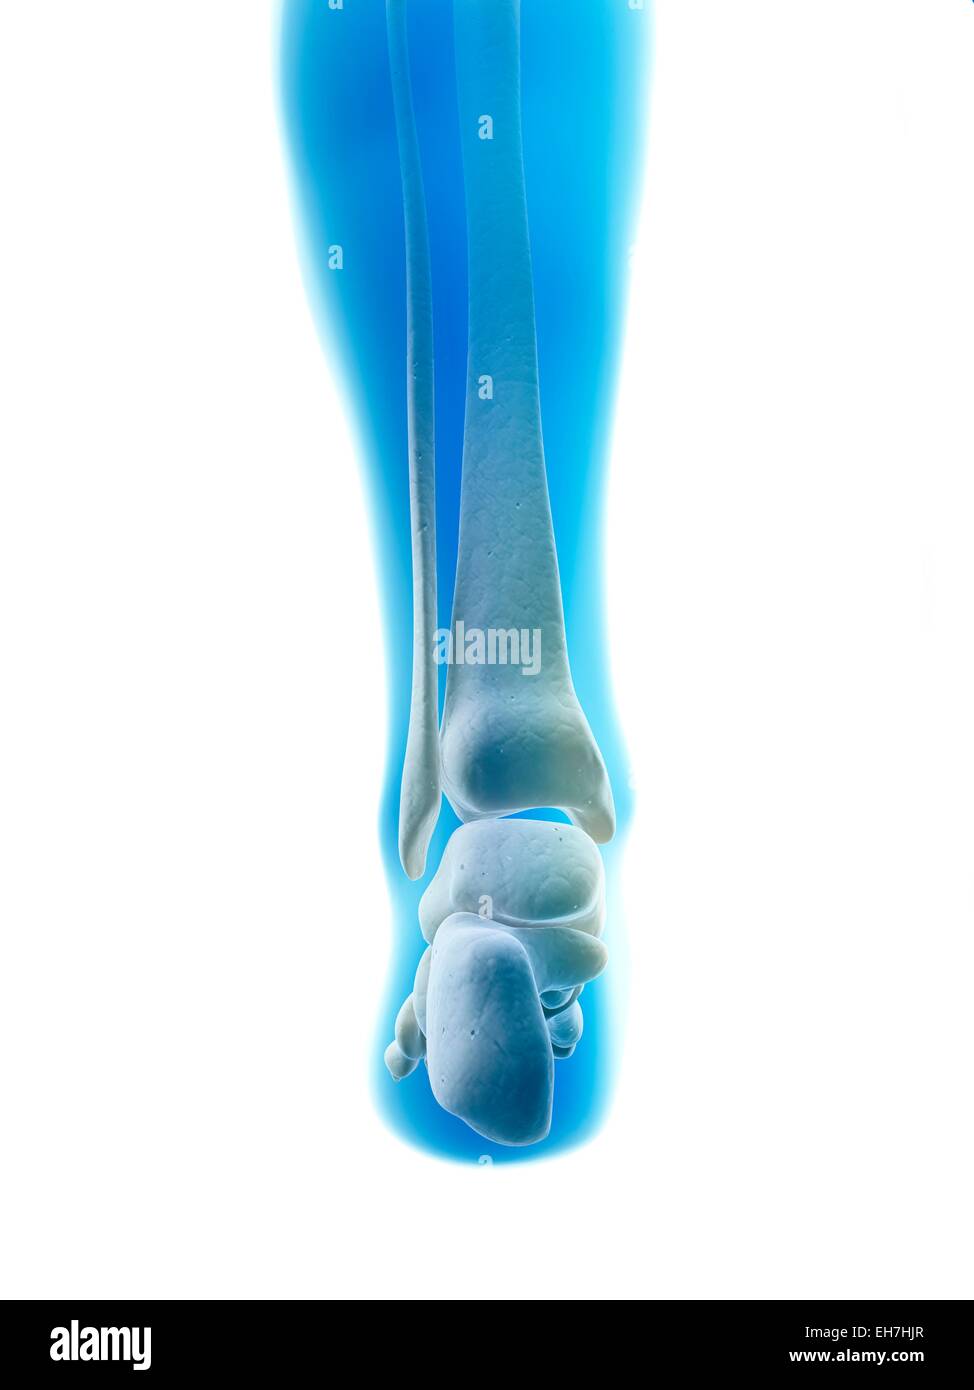 Human foot bones, illustration Stock Photo